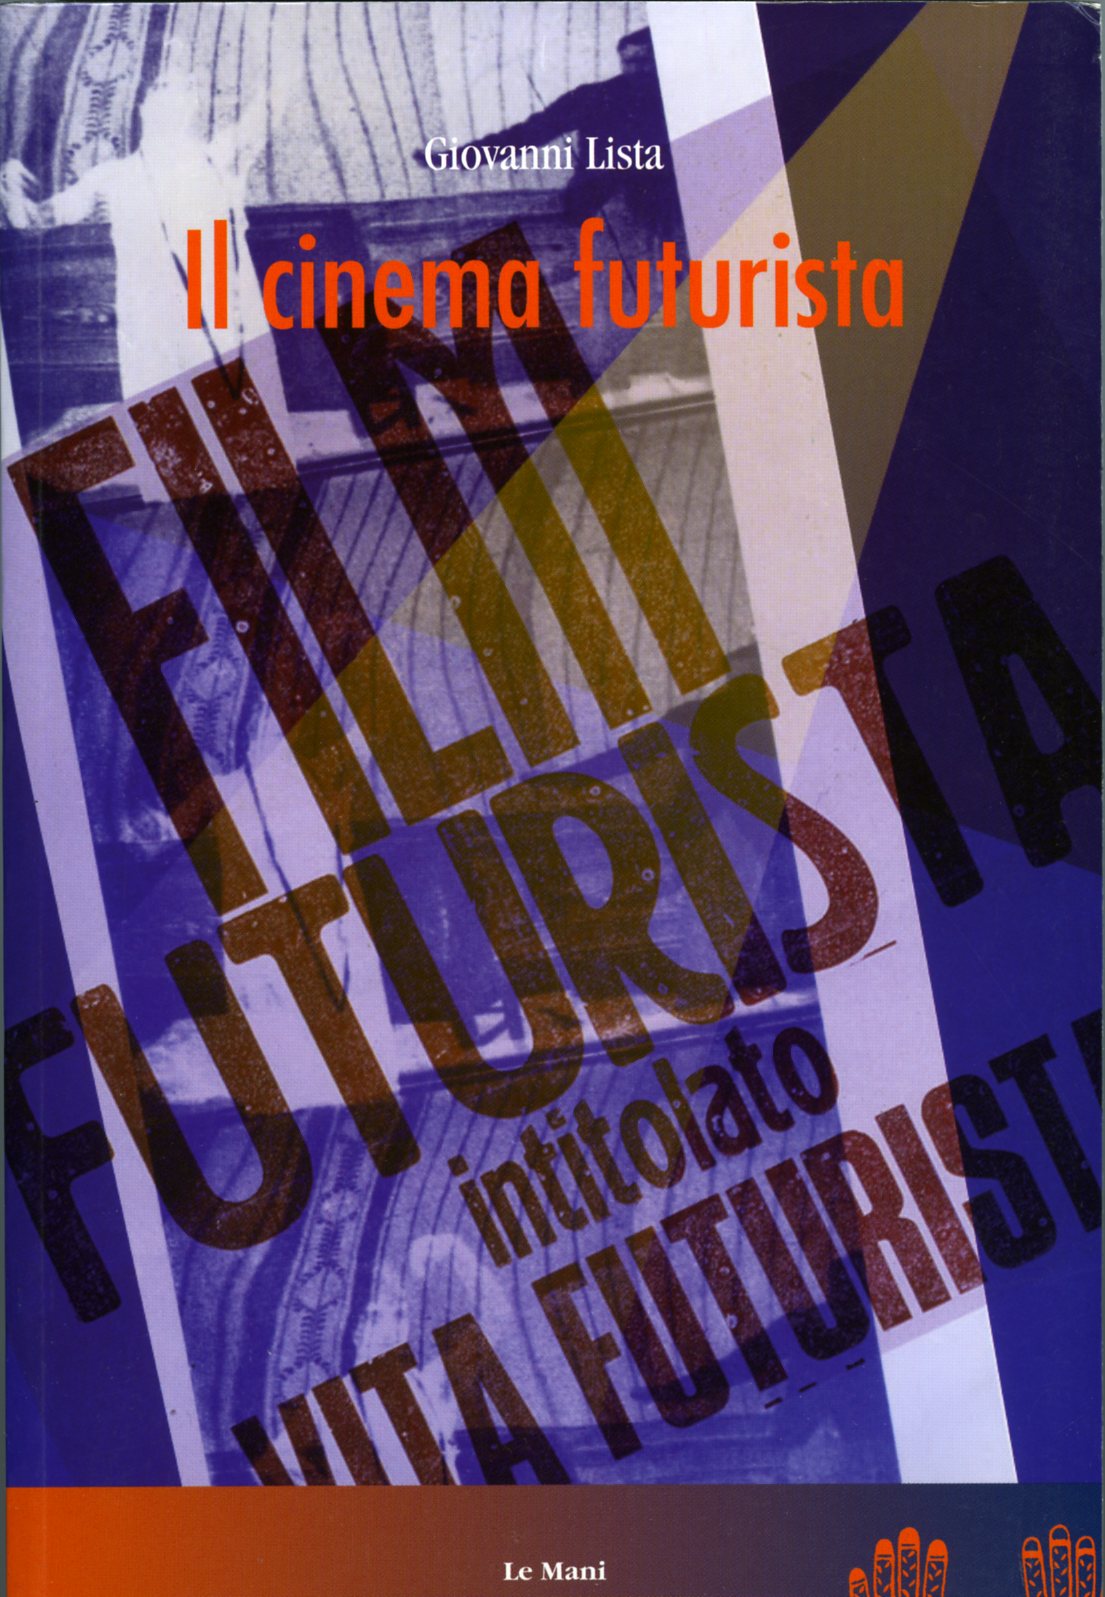 New Book on Futurist Cinema